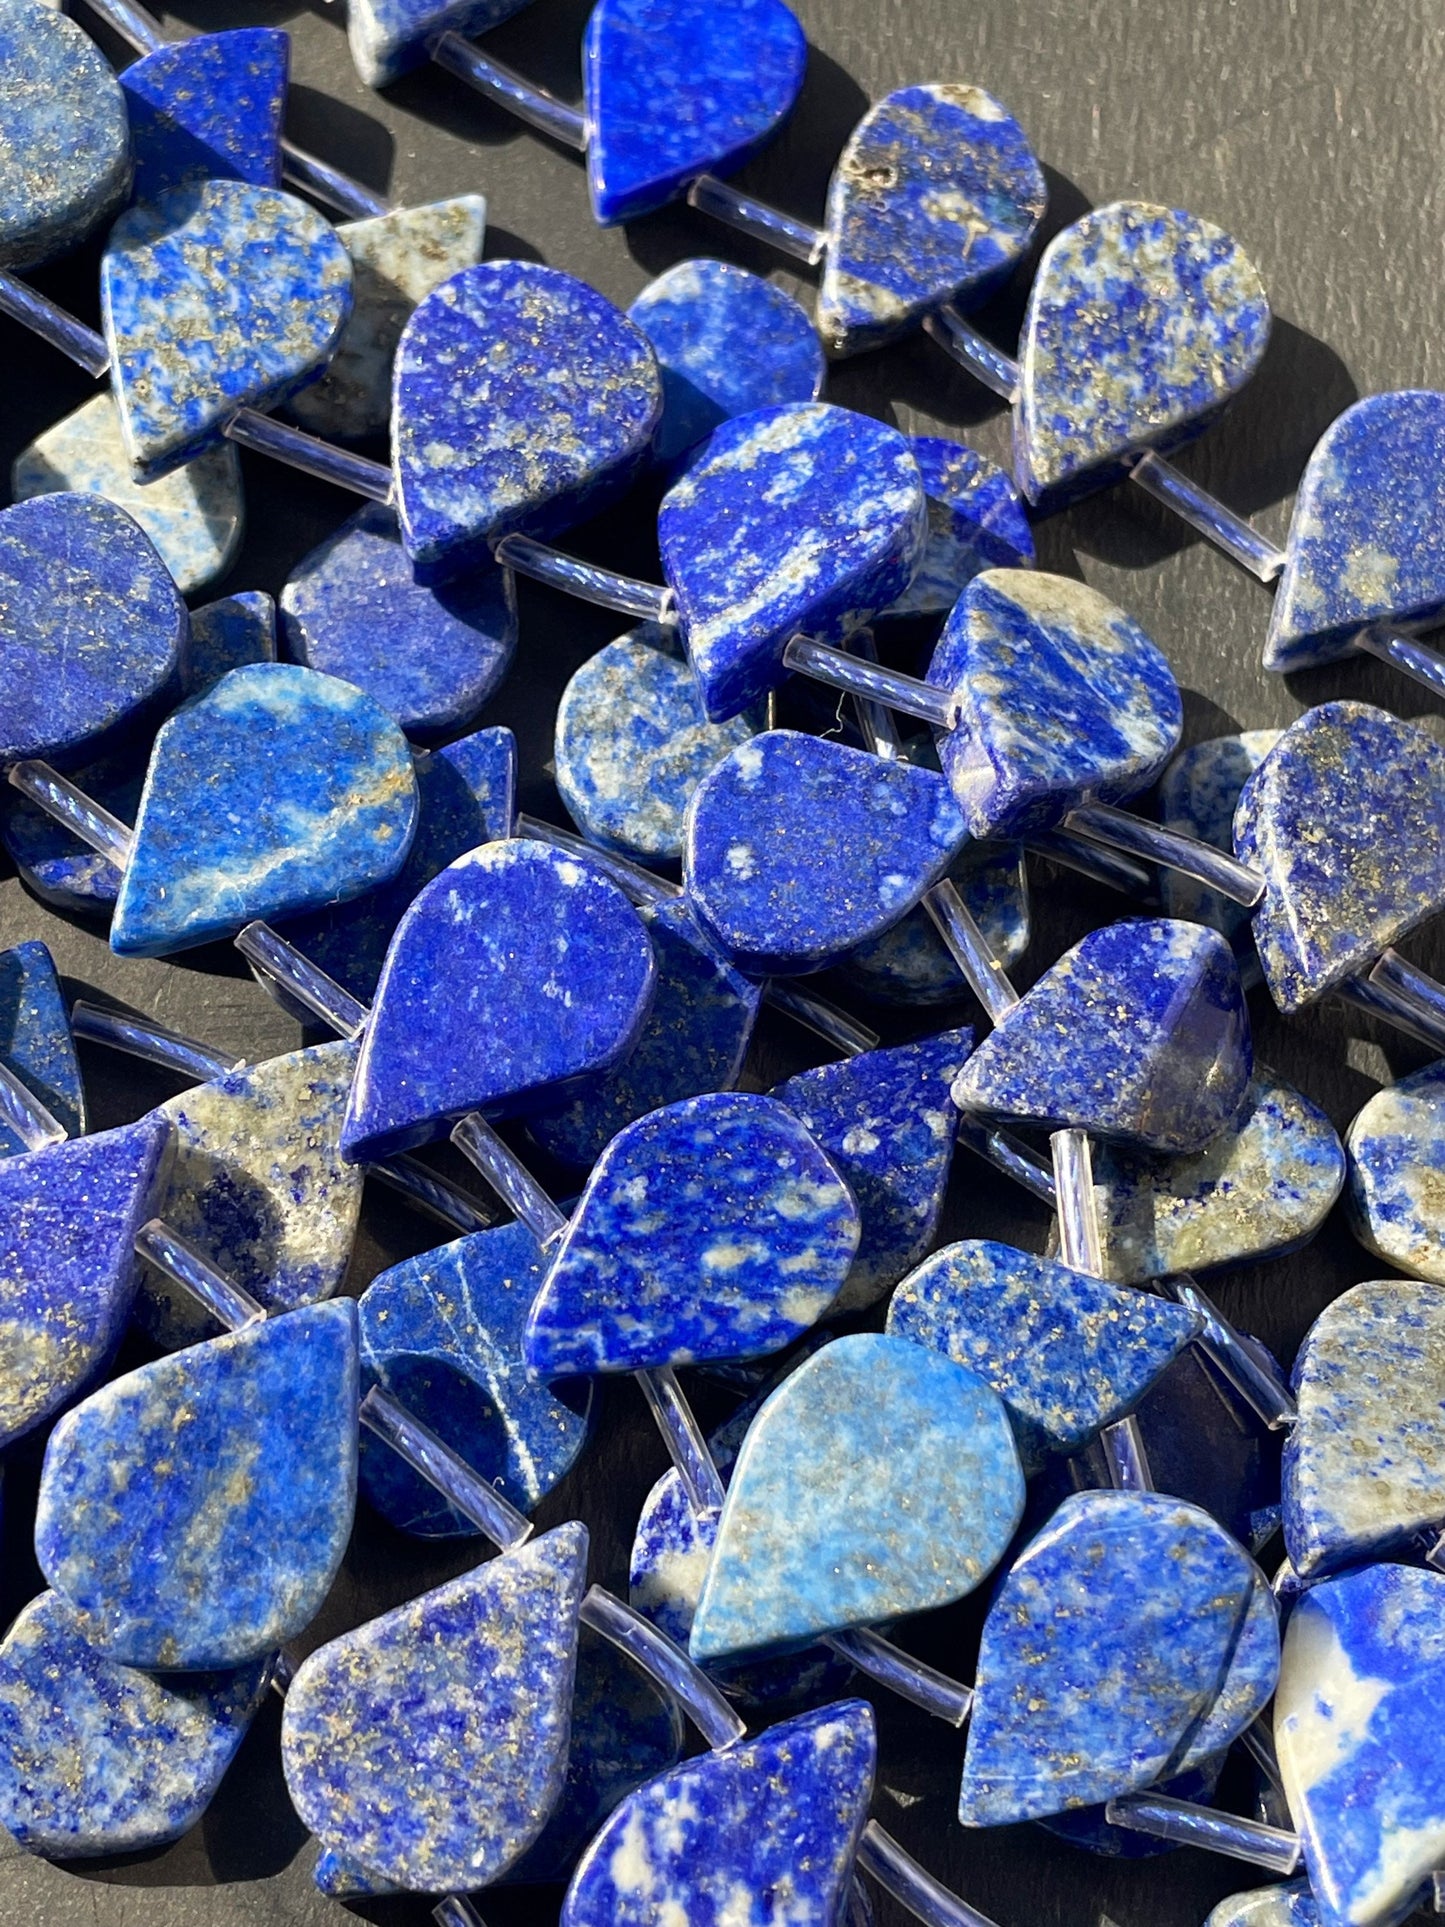 AAA Natural Lapis Lazuli Gemstone Bead 13x18mm Teardrop Shape, Gorgeous Natural Royal Blue Color Lapis Lazuli Gemstone Bead, High Quality Beads